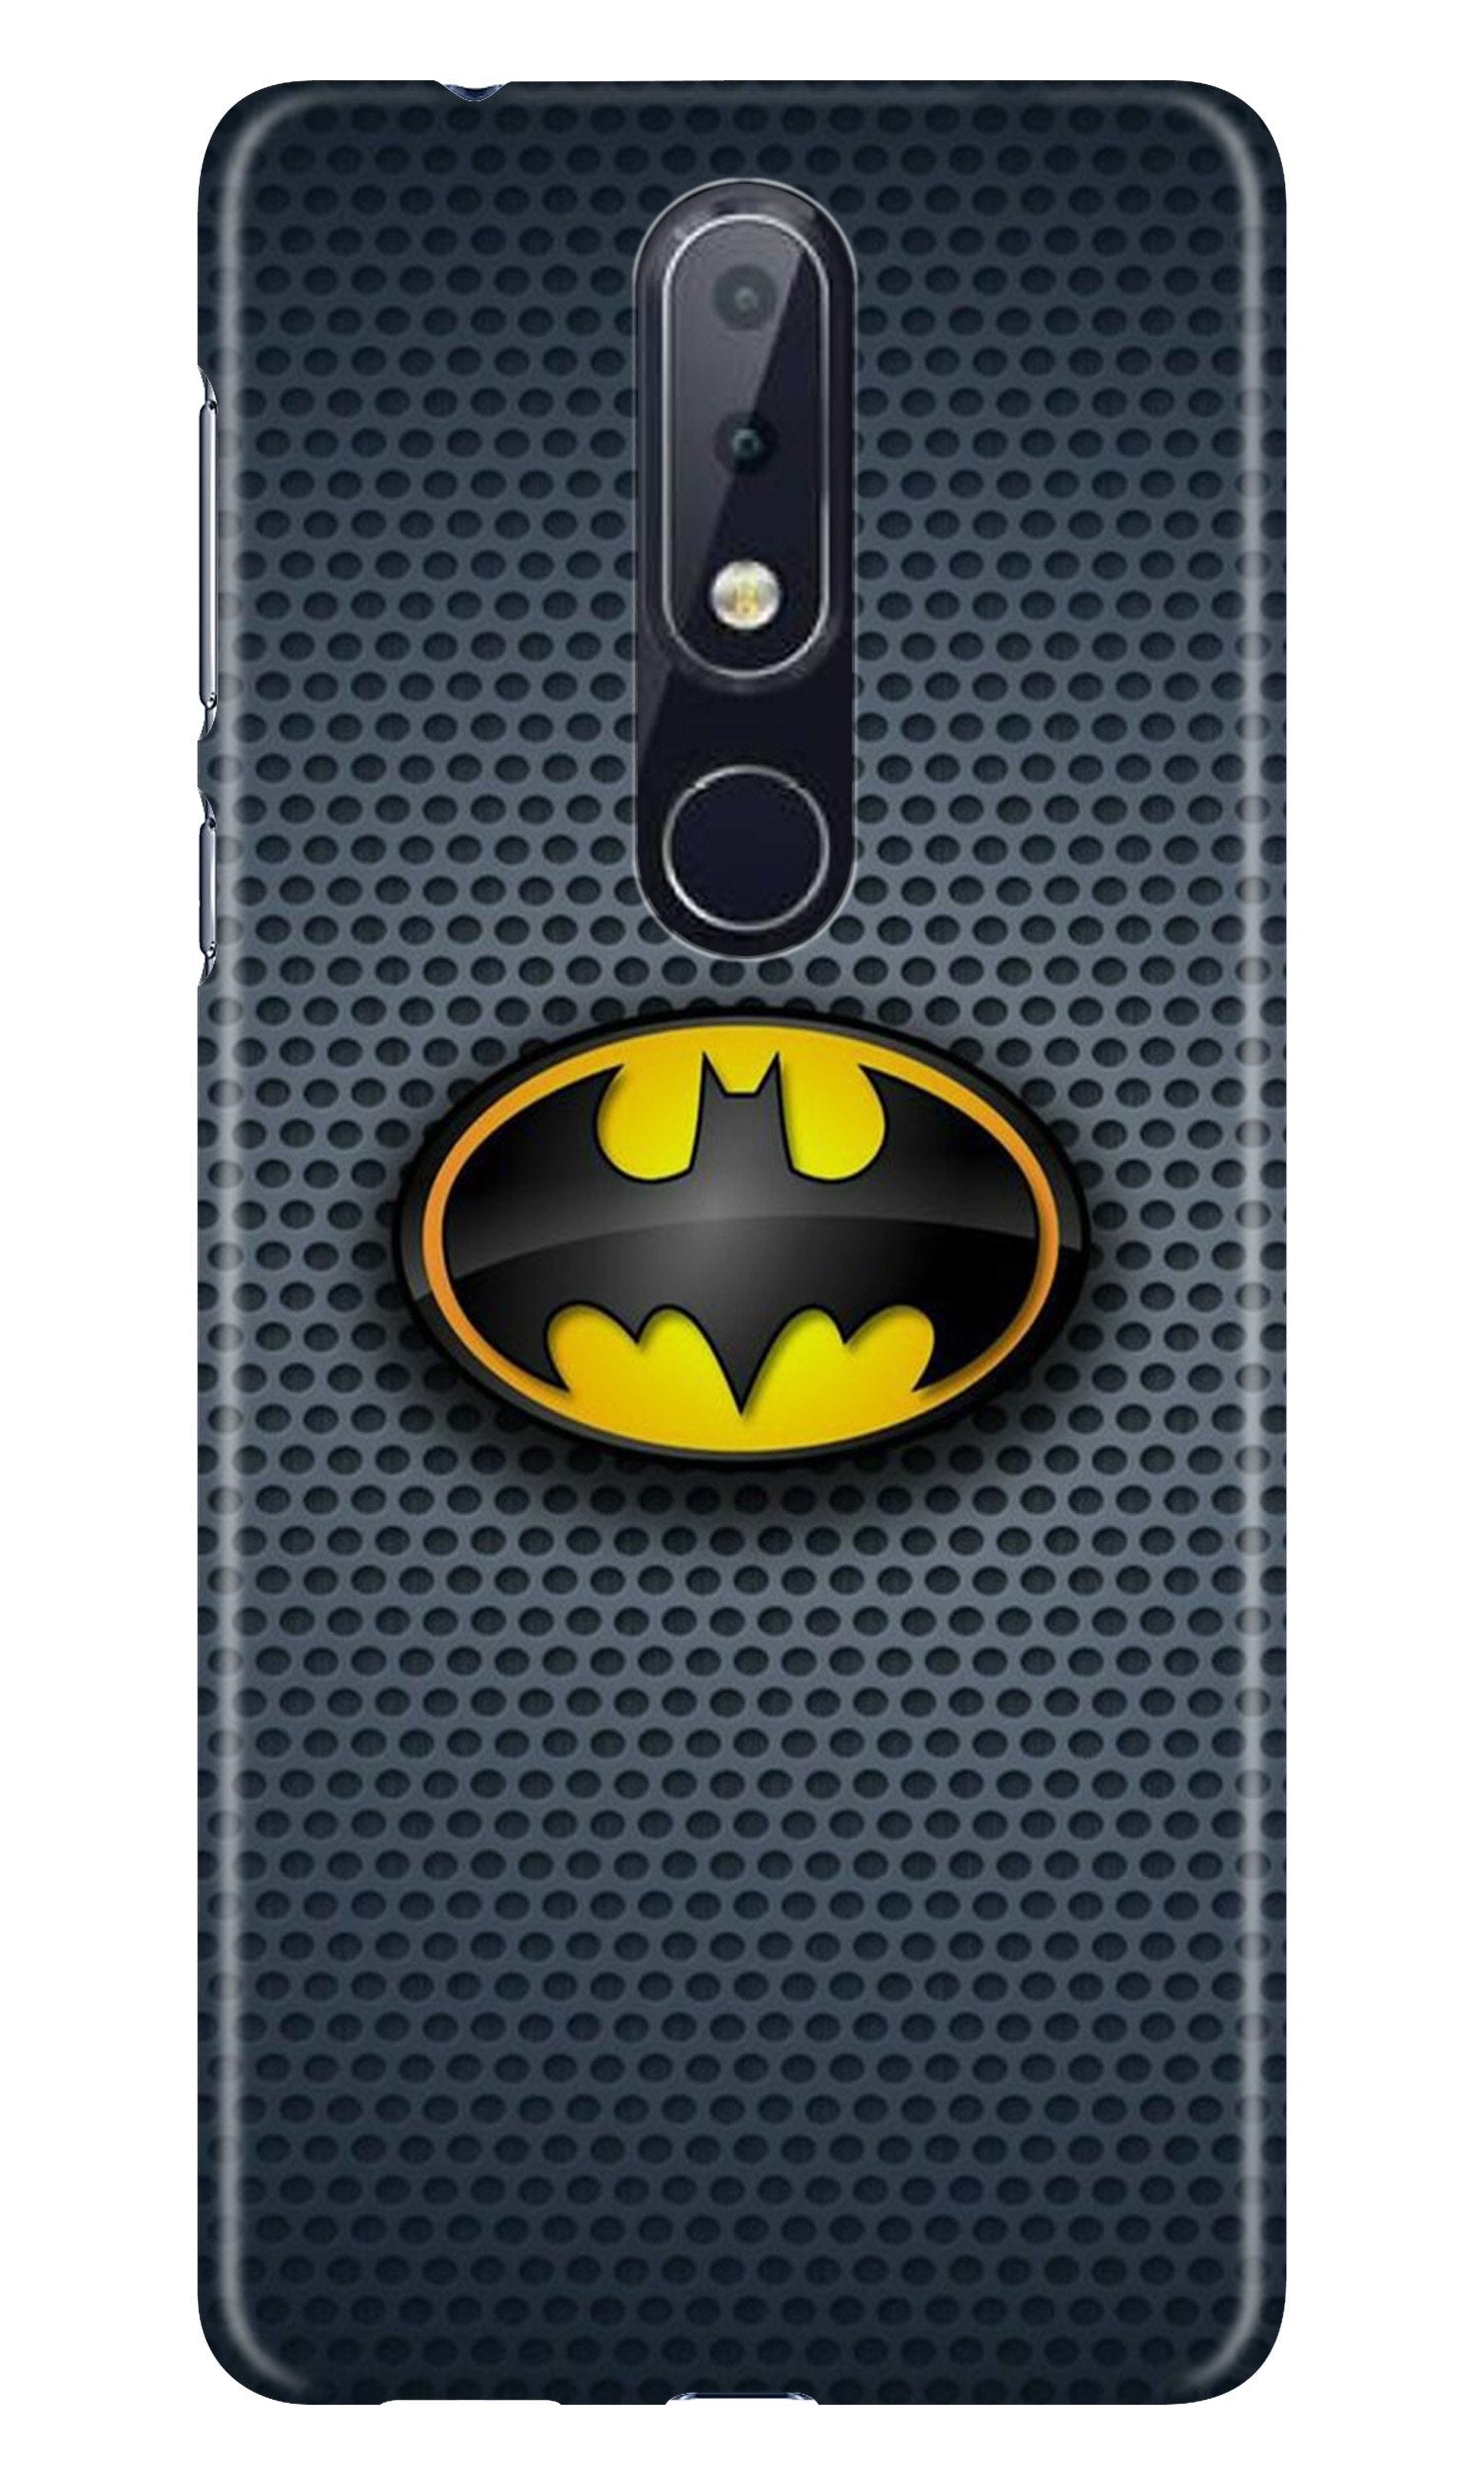 Batman Case for Nokia 6.1 Plus (Design No. 244)